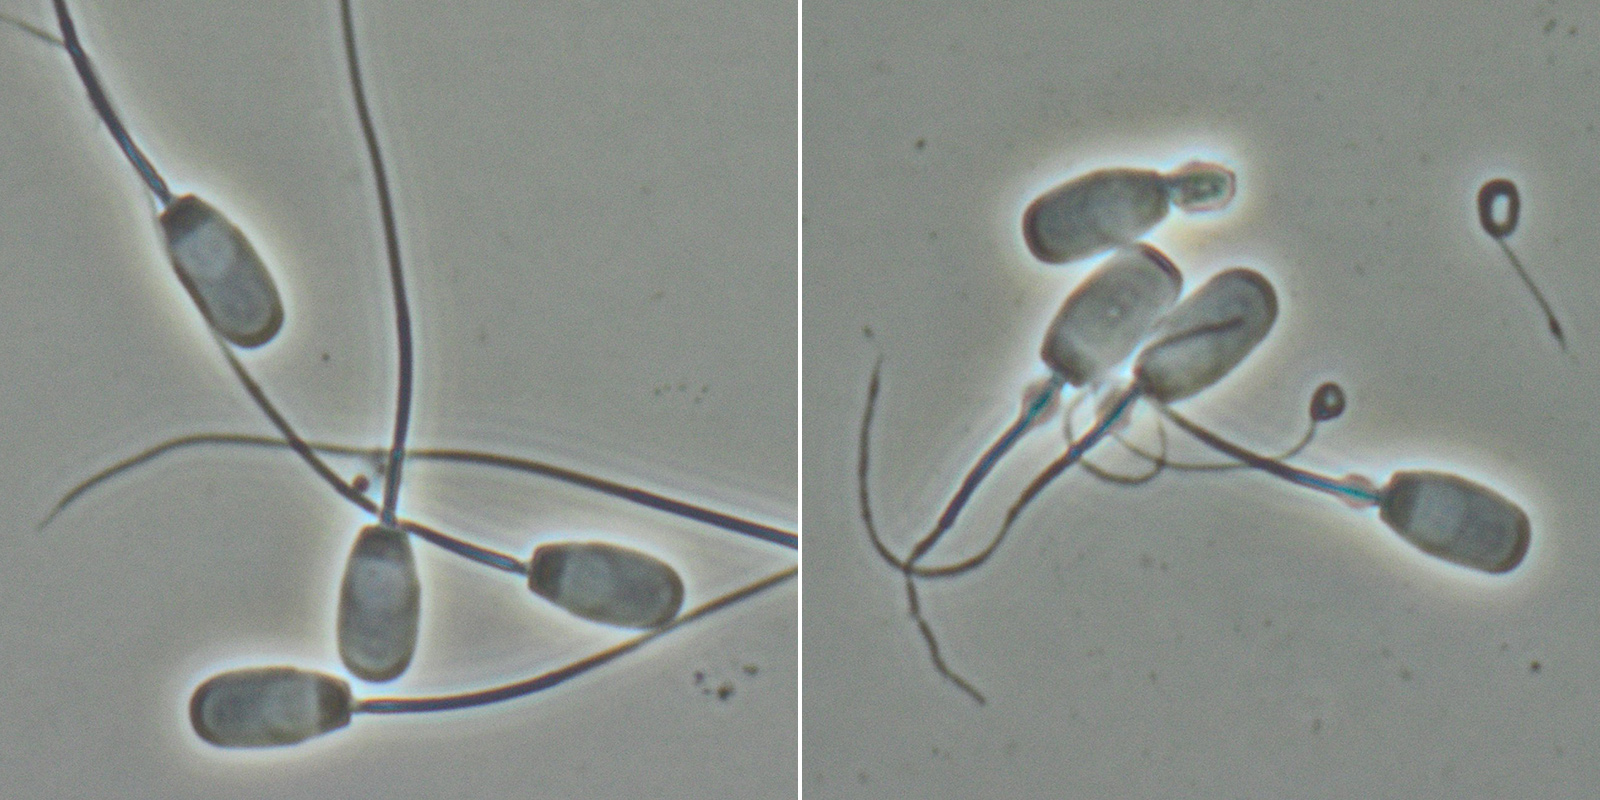 Normale und defekte Spermien unter dem Mikroskop